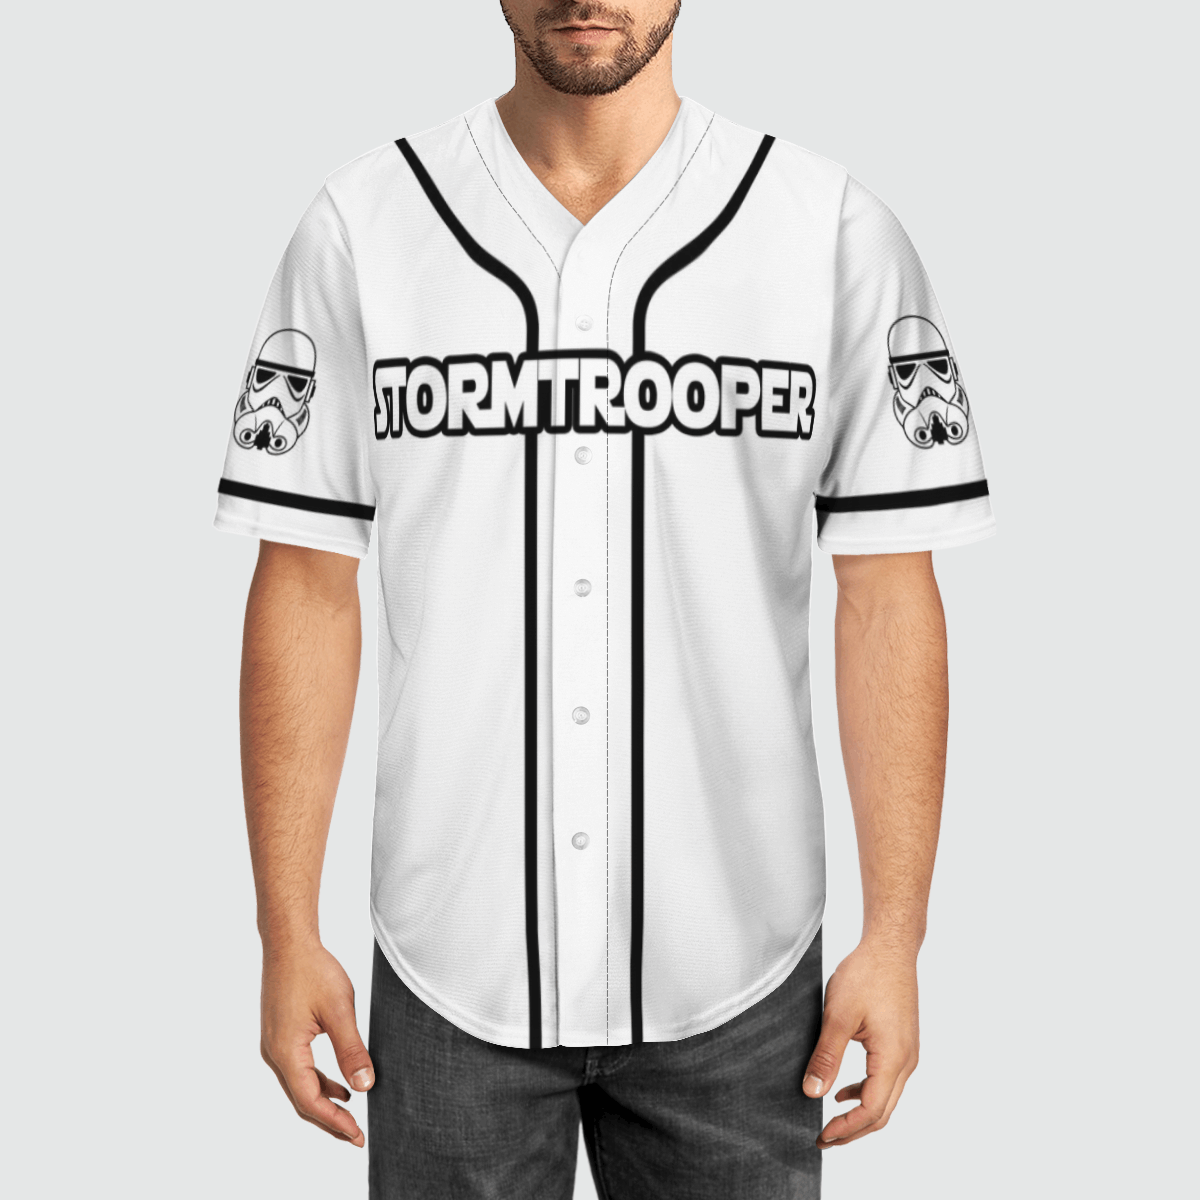 Stormtrooper Star Wars baseball shirt – LIMITED EDITION